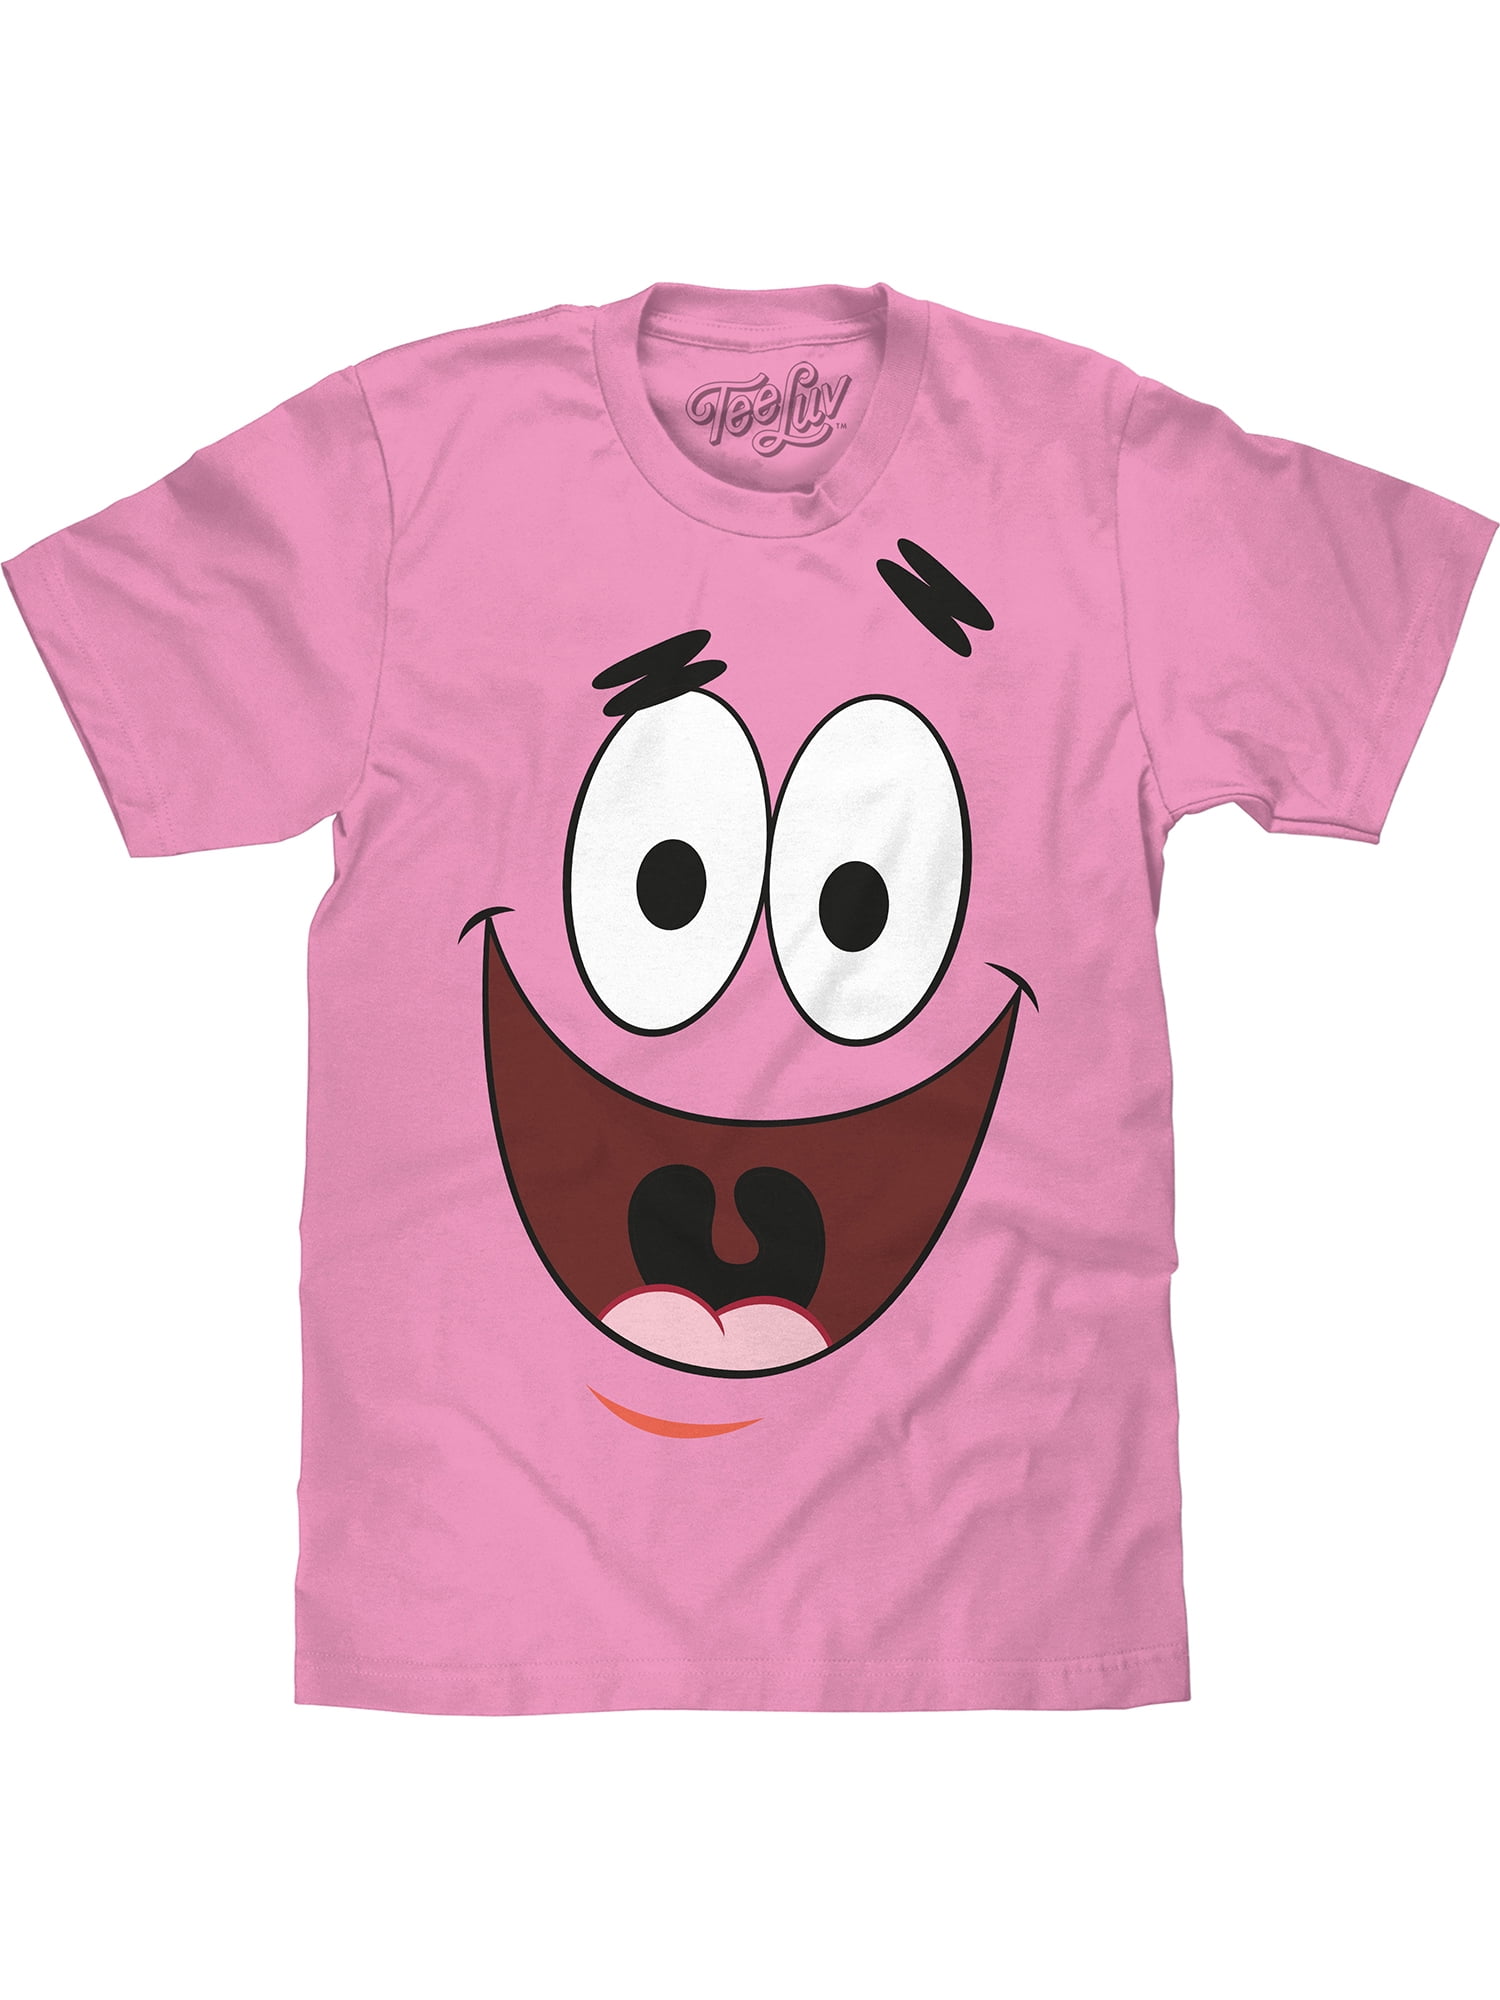 Tee Luv Men's Patrick Star Cartoon Character Face Shirt (L)